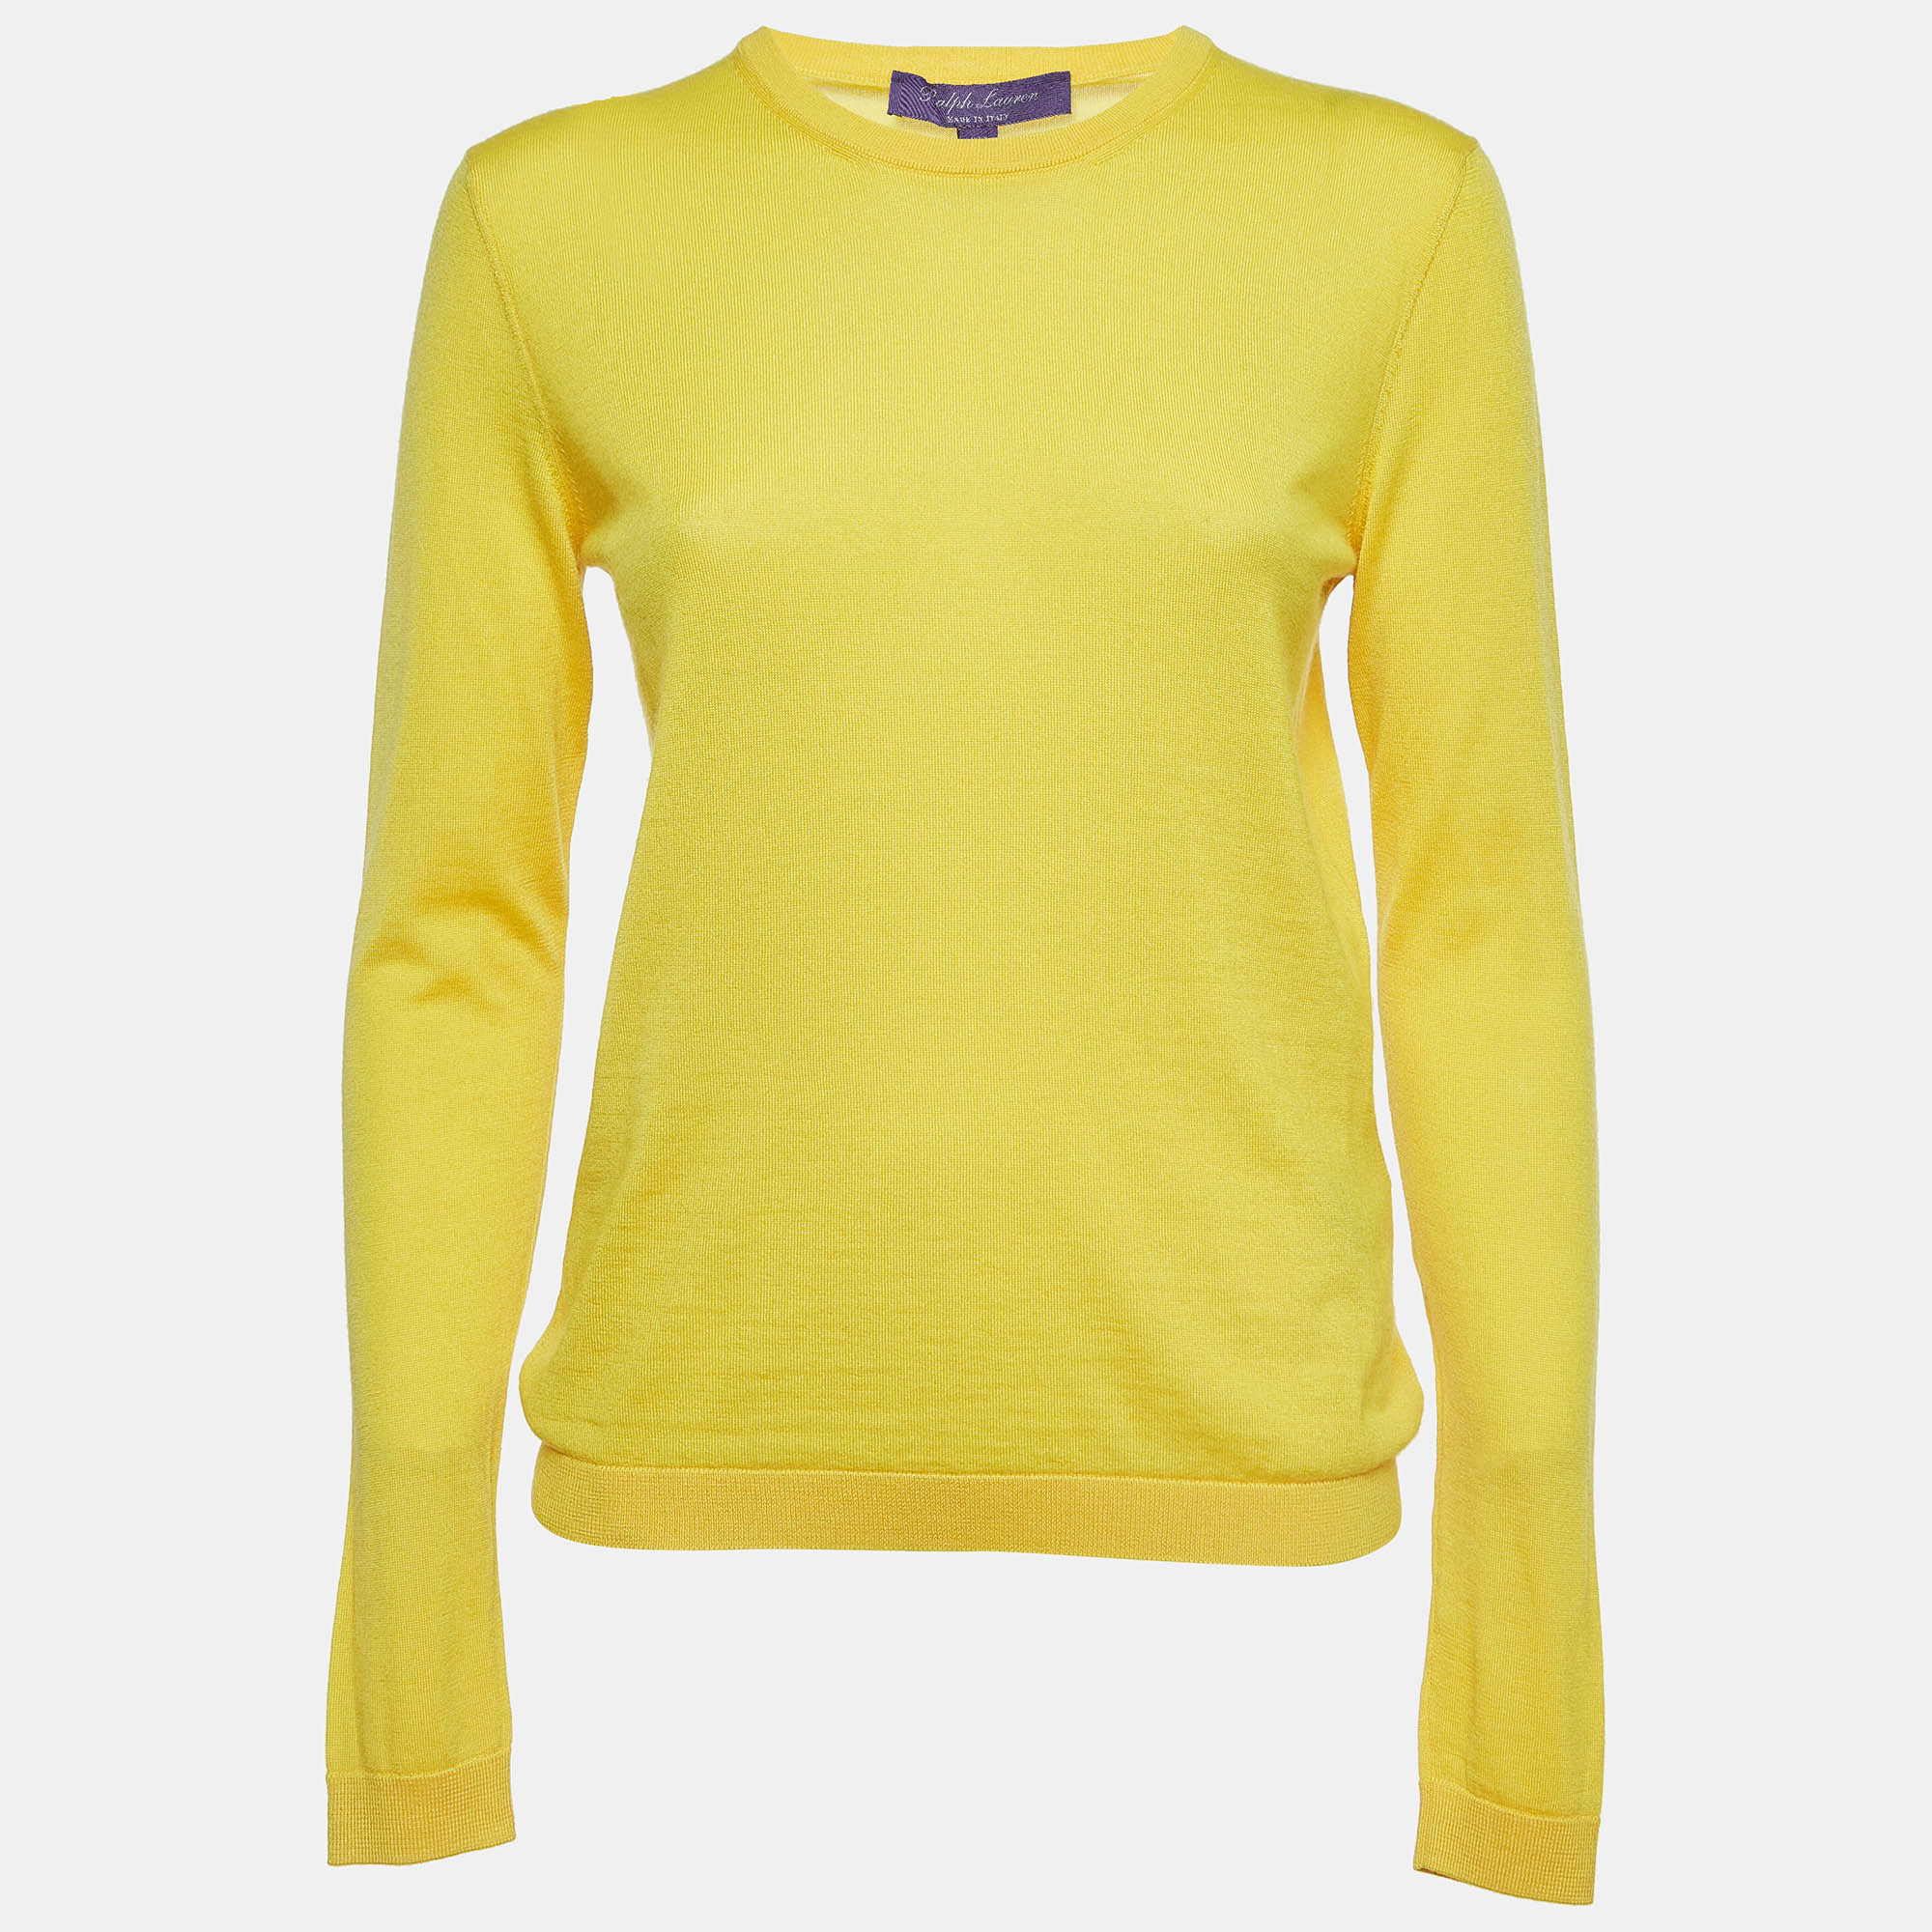 Ralph Lauren Yellow Cashmere Round Neck Sweater S